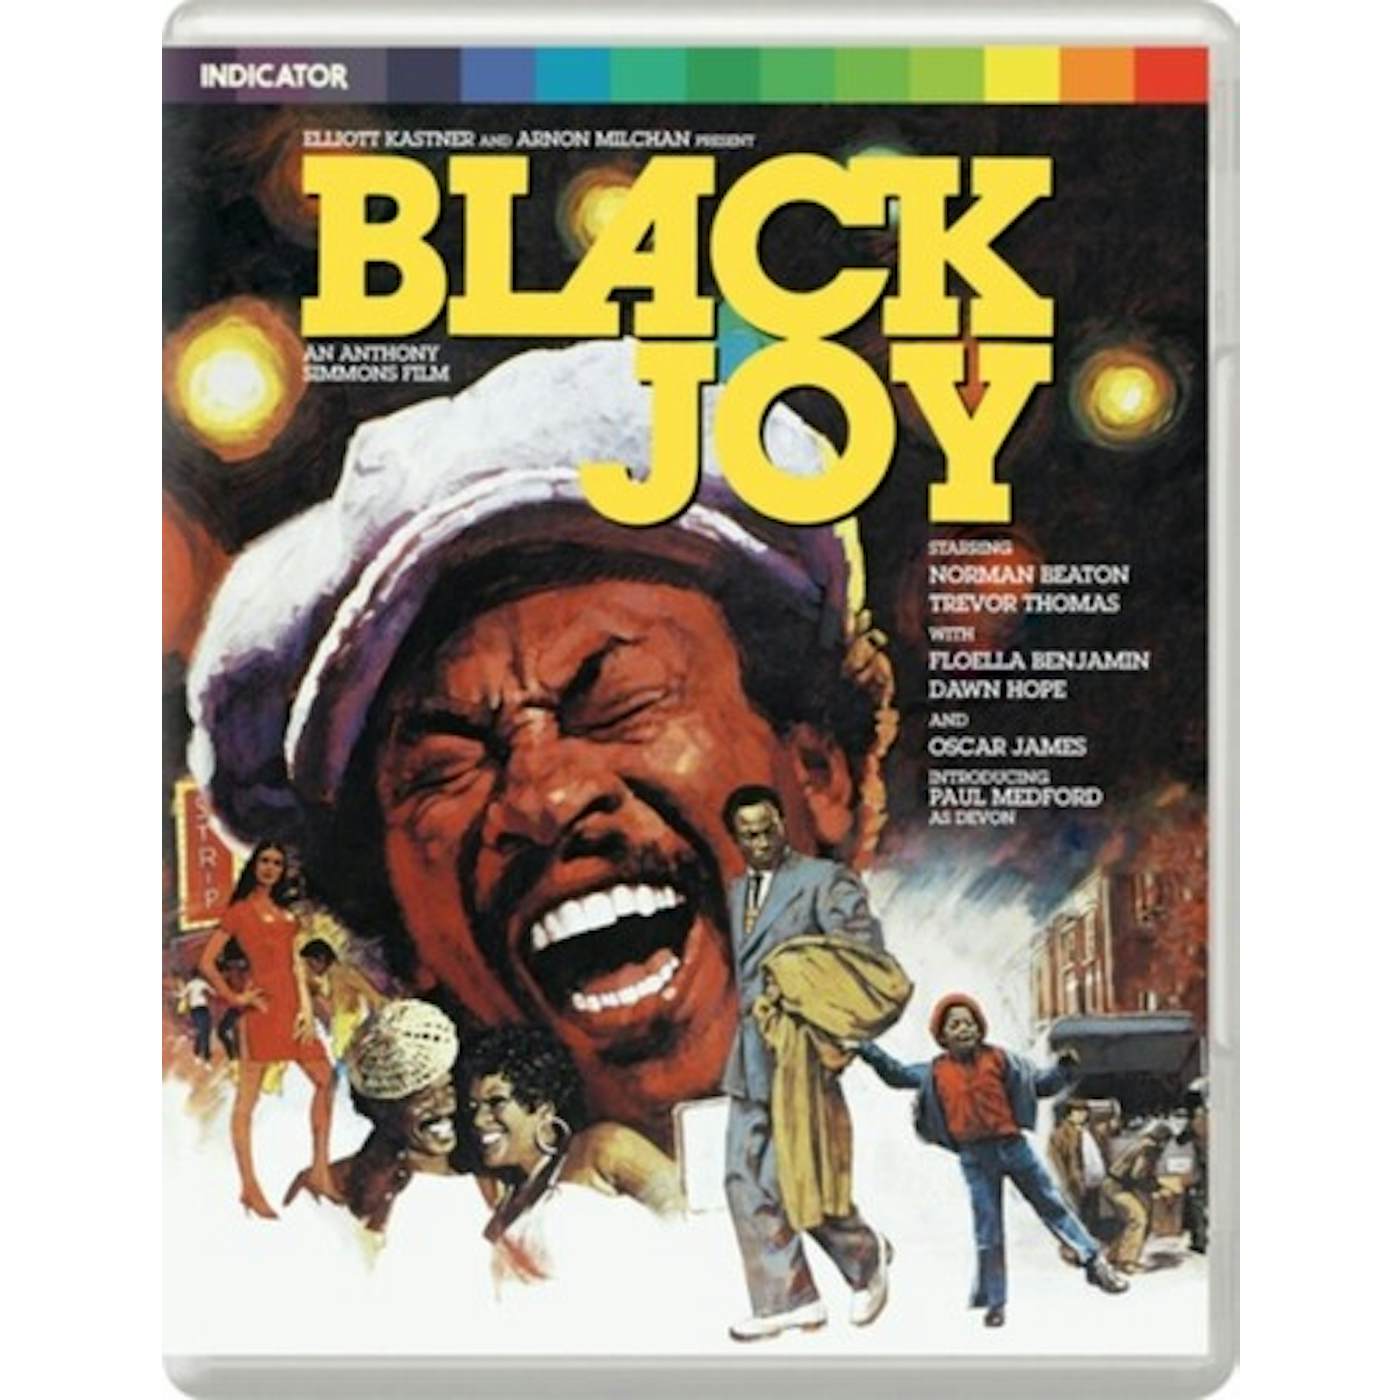 BLACK JOY (1977) Blu-ray